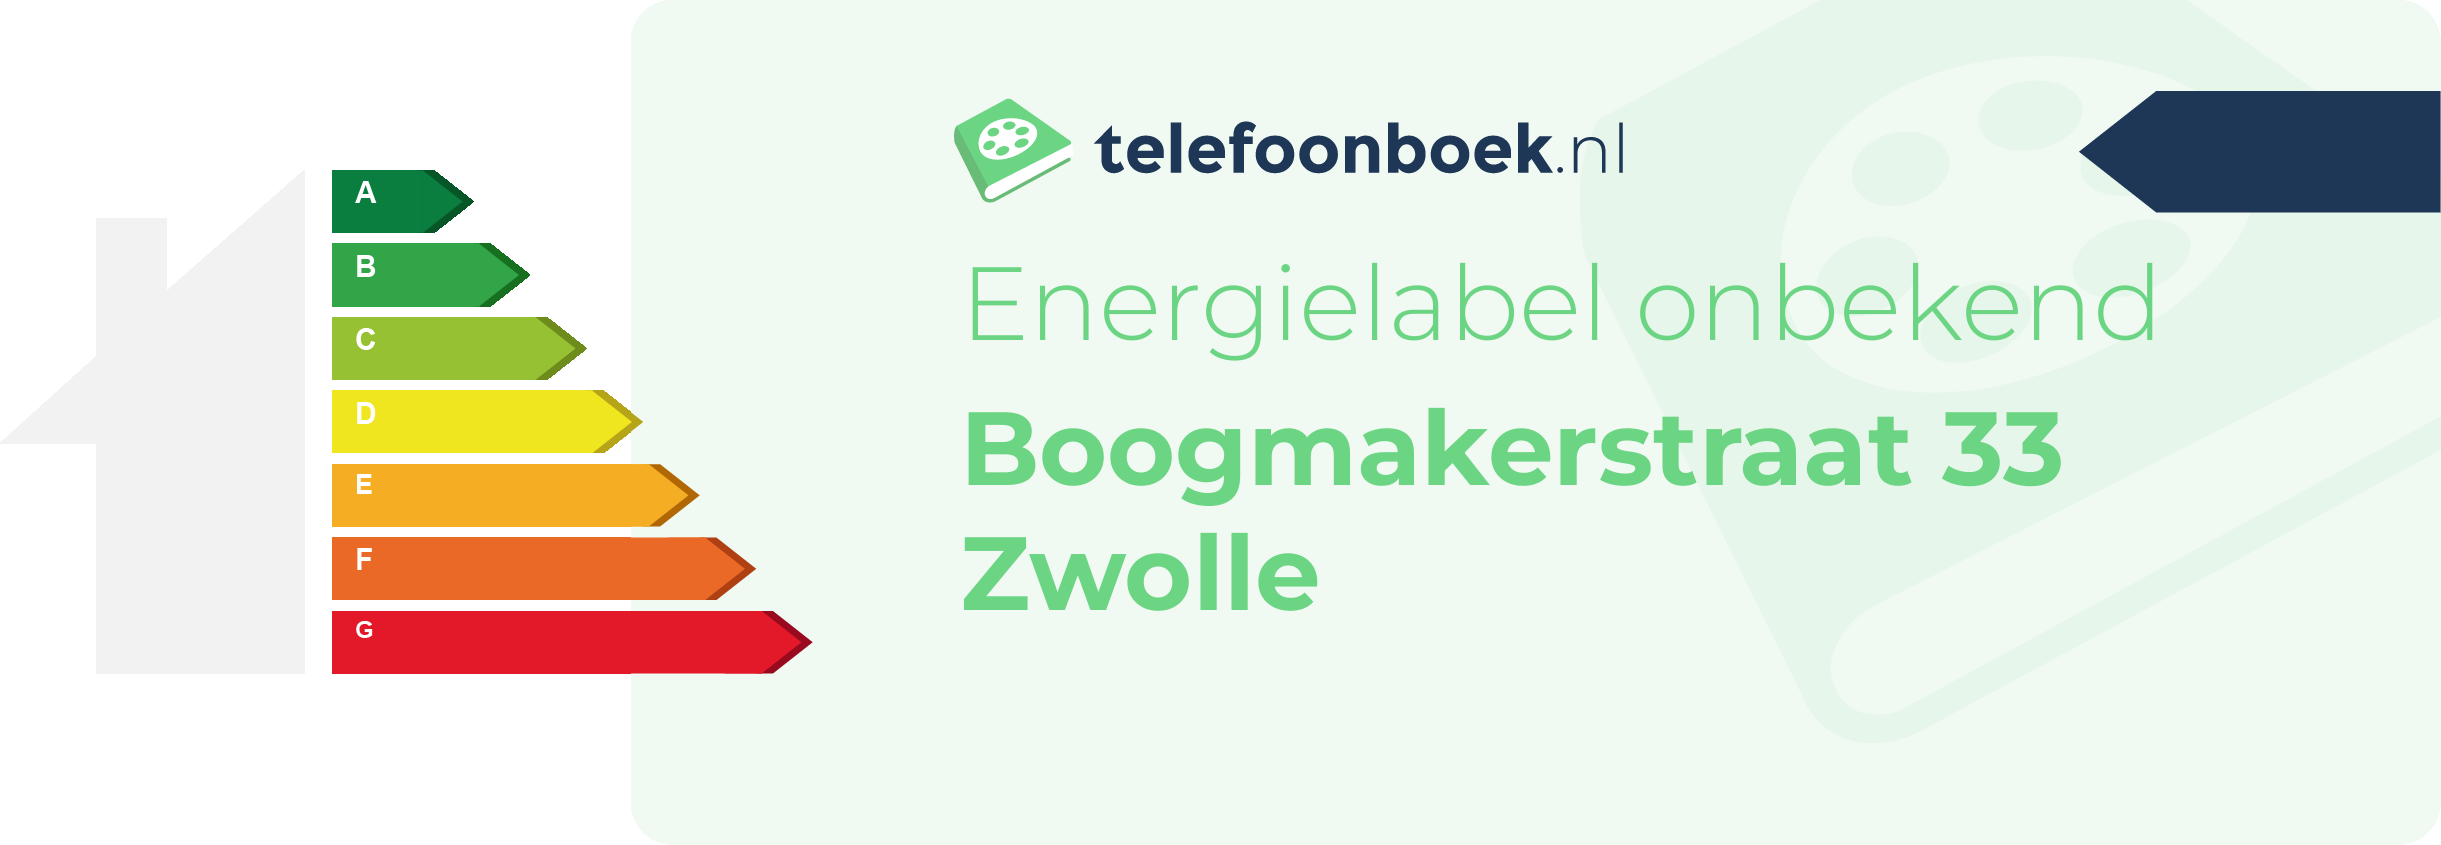 Energielabel Boogmakerstraat 33 Zwolle